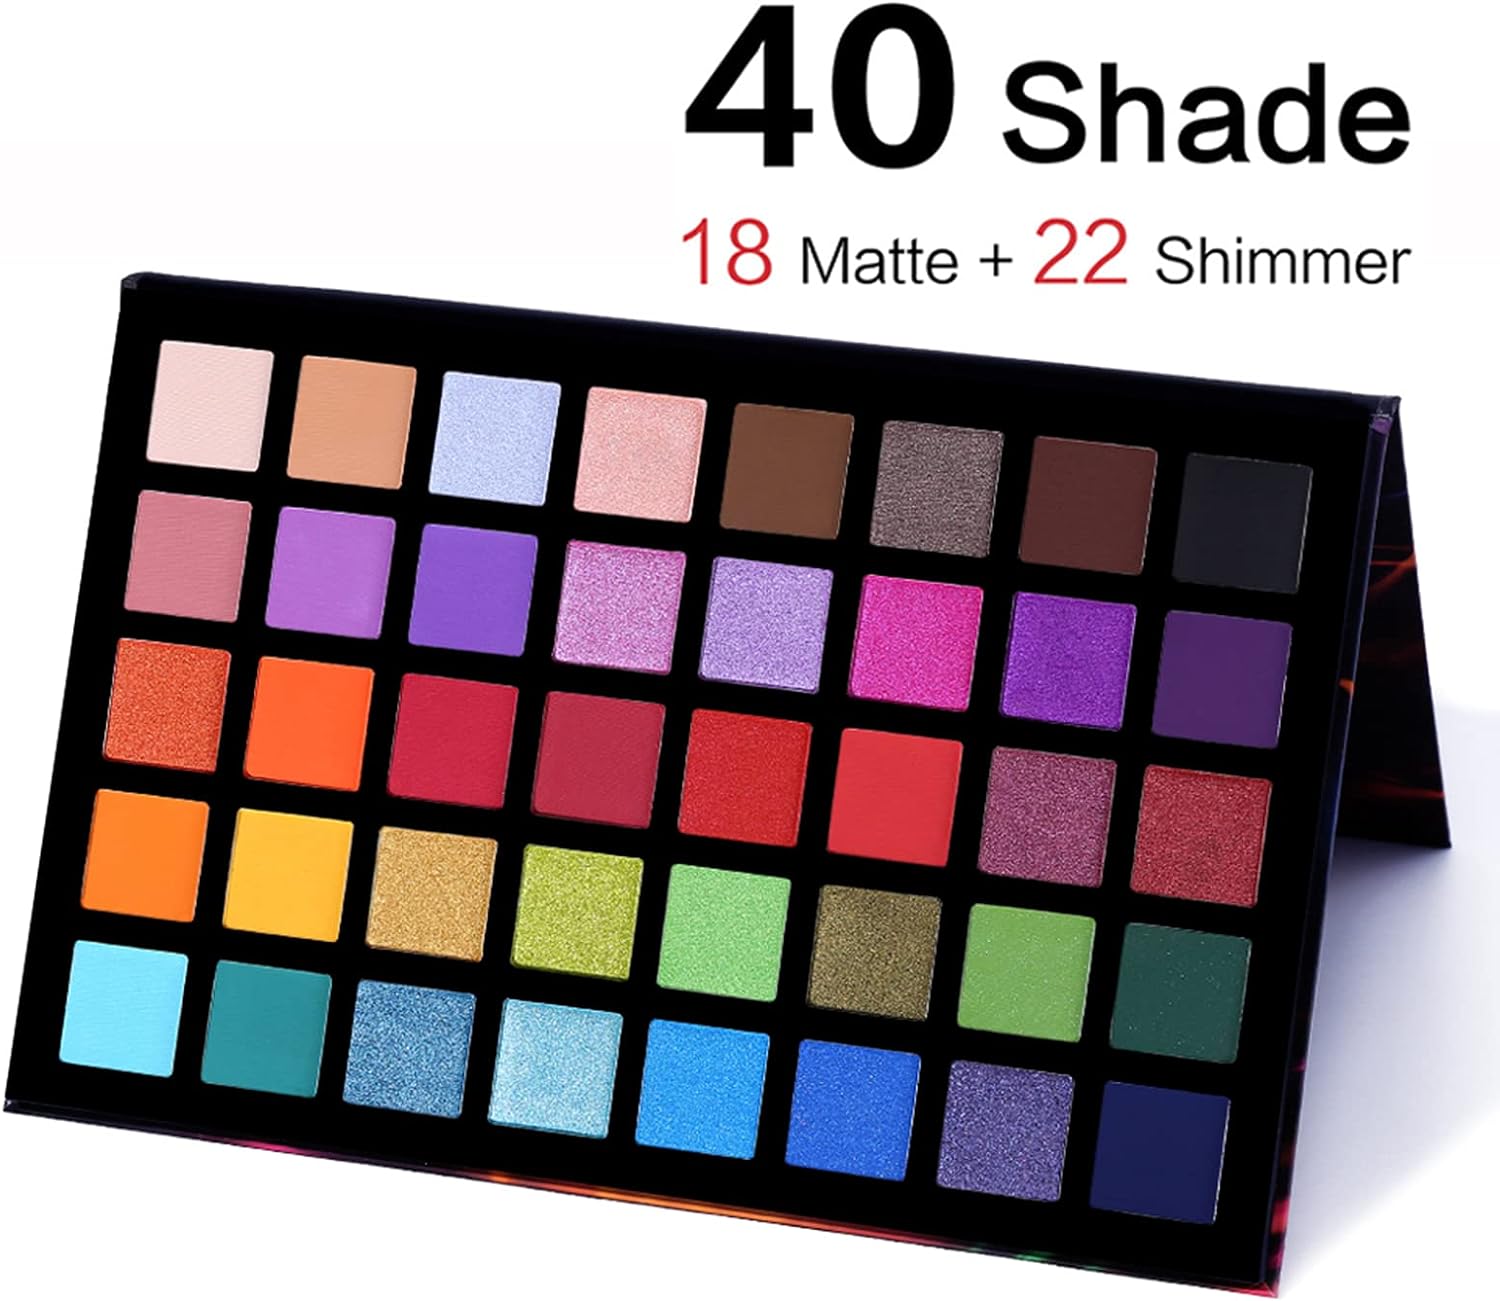 UCANBE 40 Colors Waterproof Eyeshadow Palette - Long-Lasting Eye Makeup Palette - Shimmer Matte Makeup Palettes Highly Pigmented